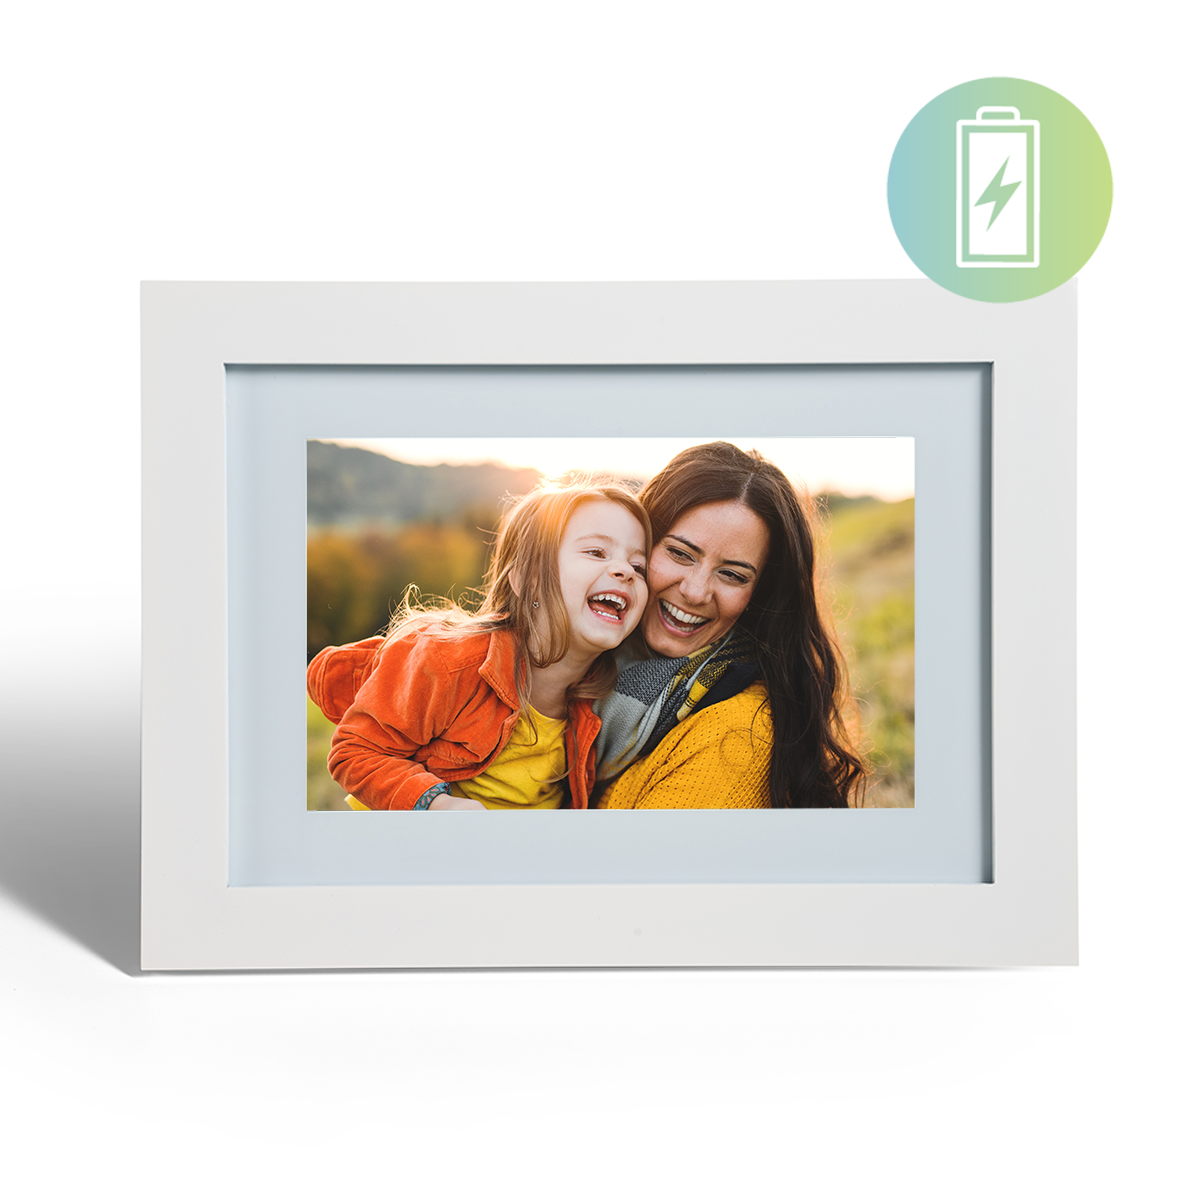 PhotoSpring Charge Pro Digital Frame